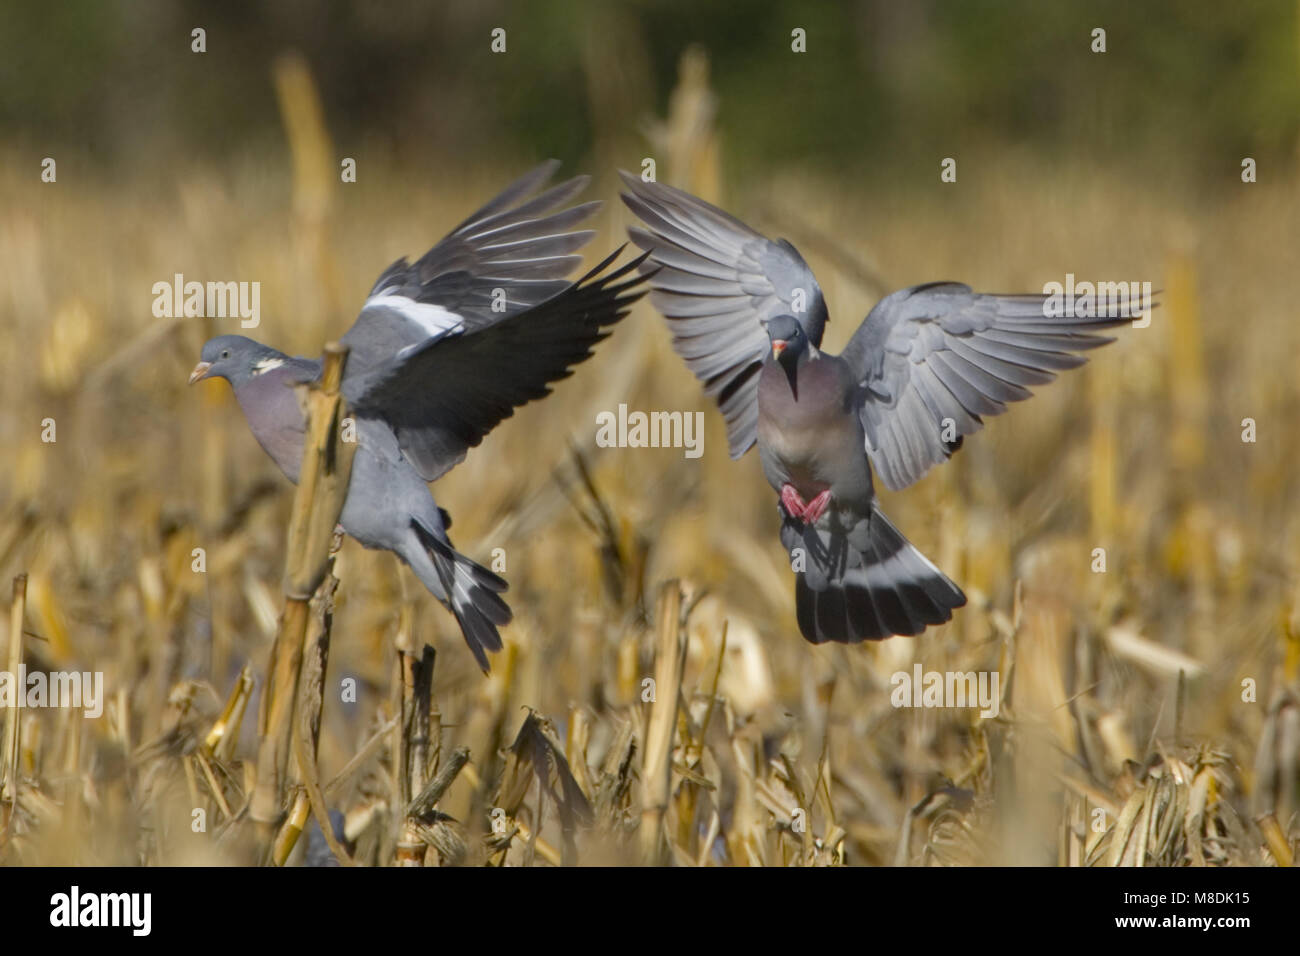 Houtduif landend in veld; Common Wood Pigeon landing in field Stock Photo